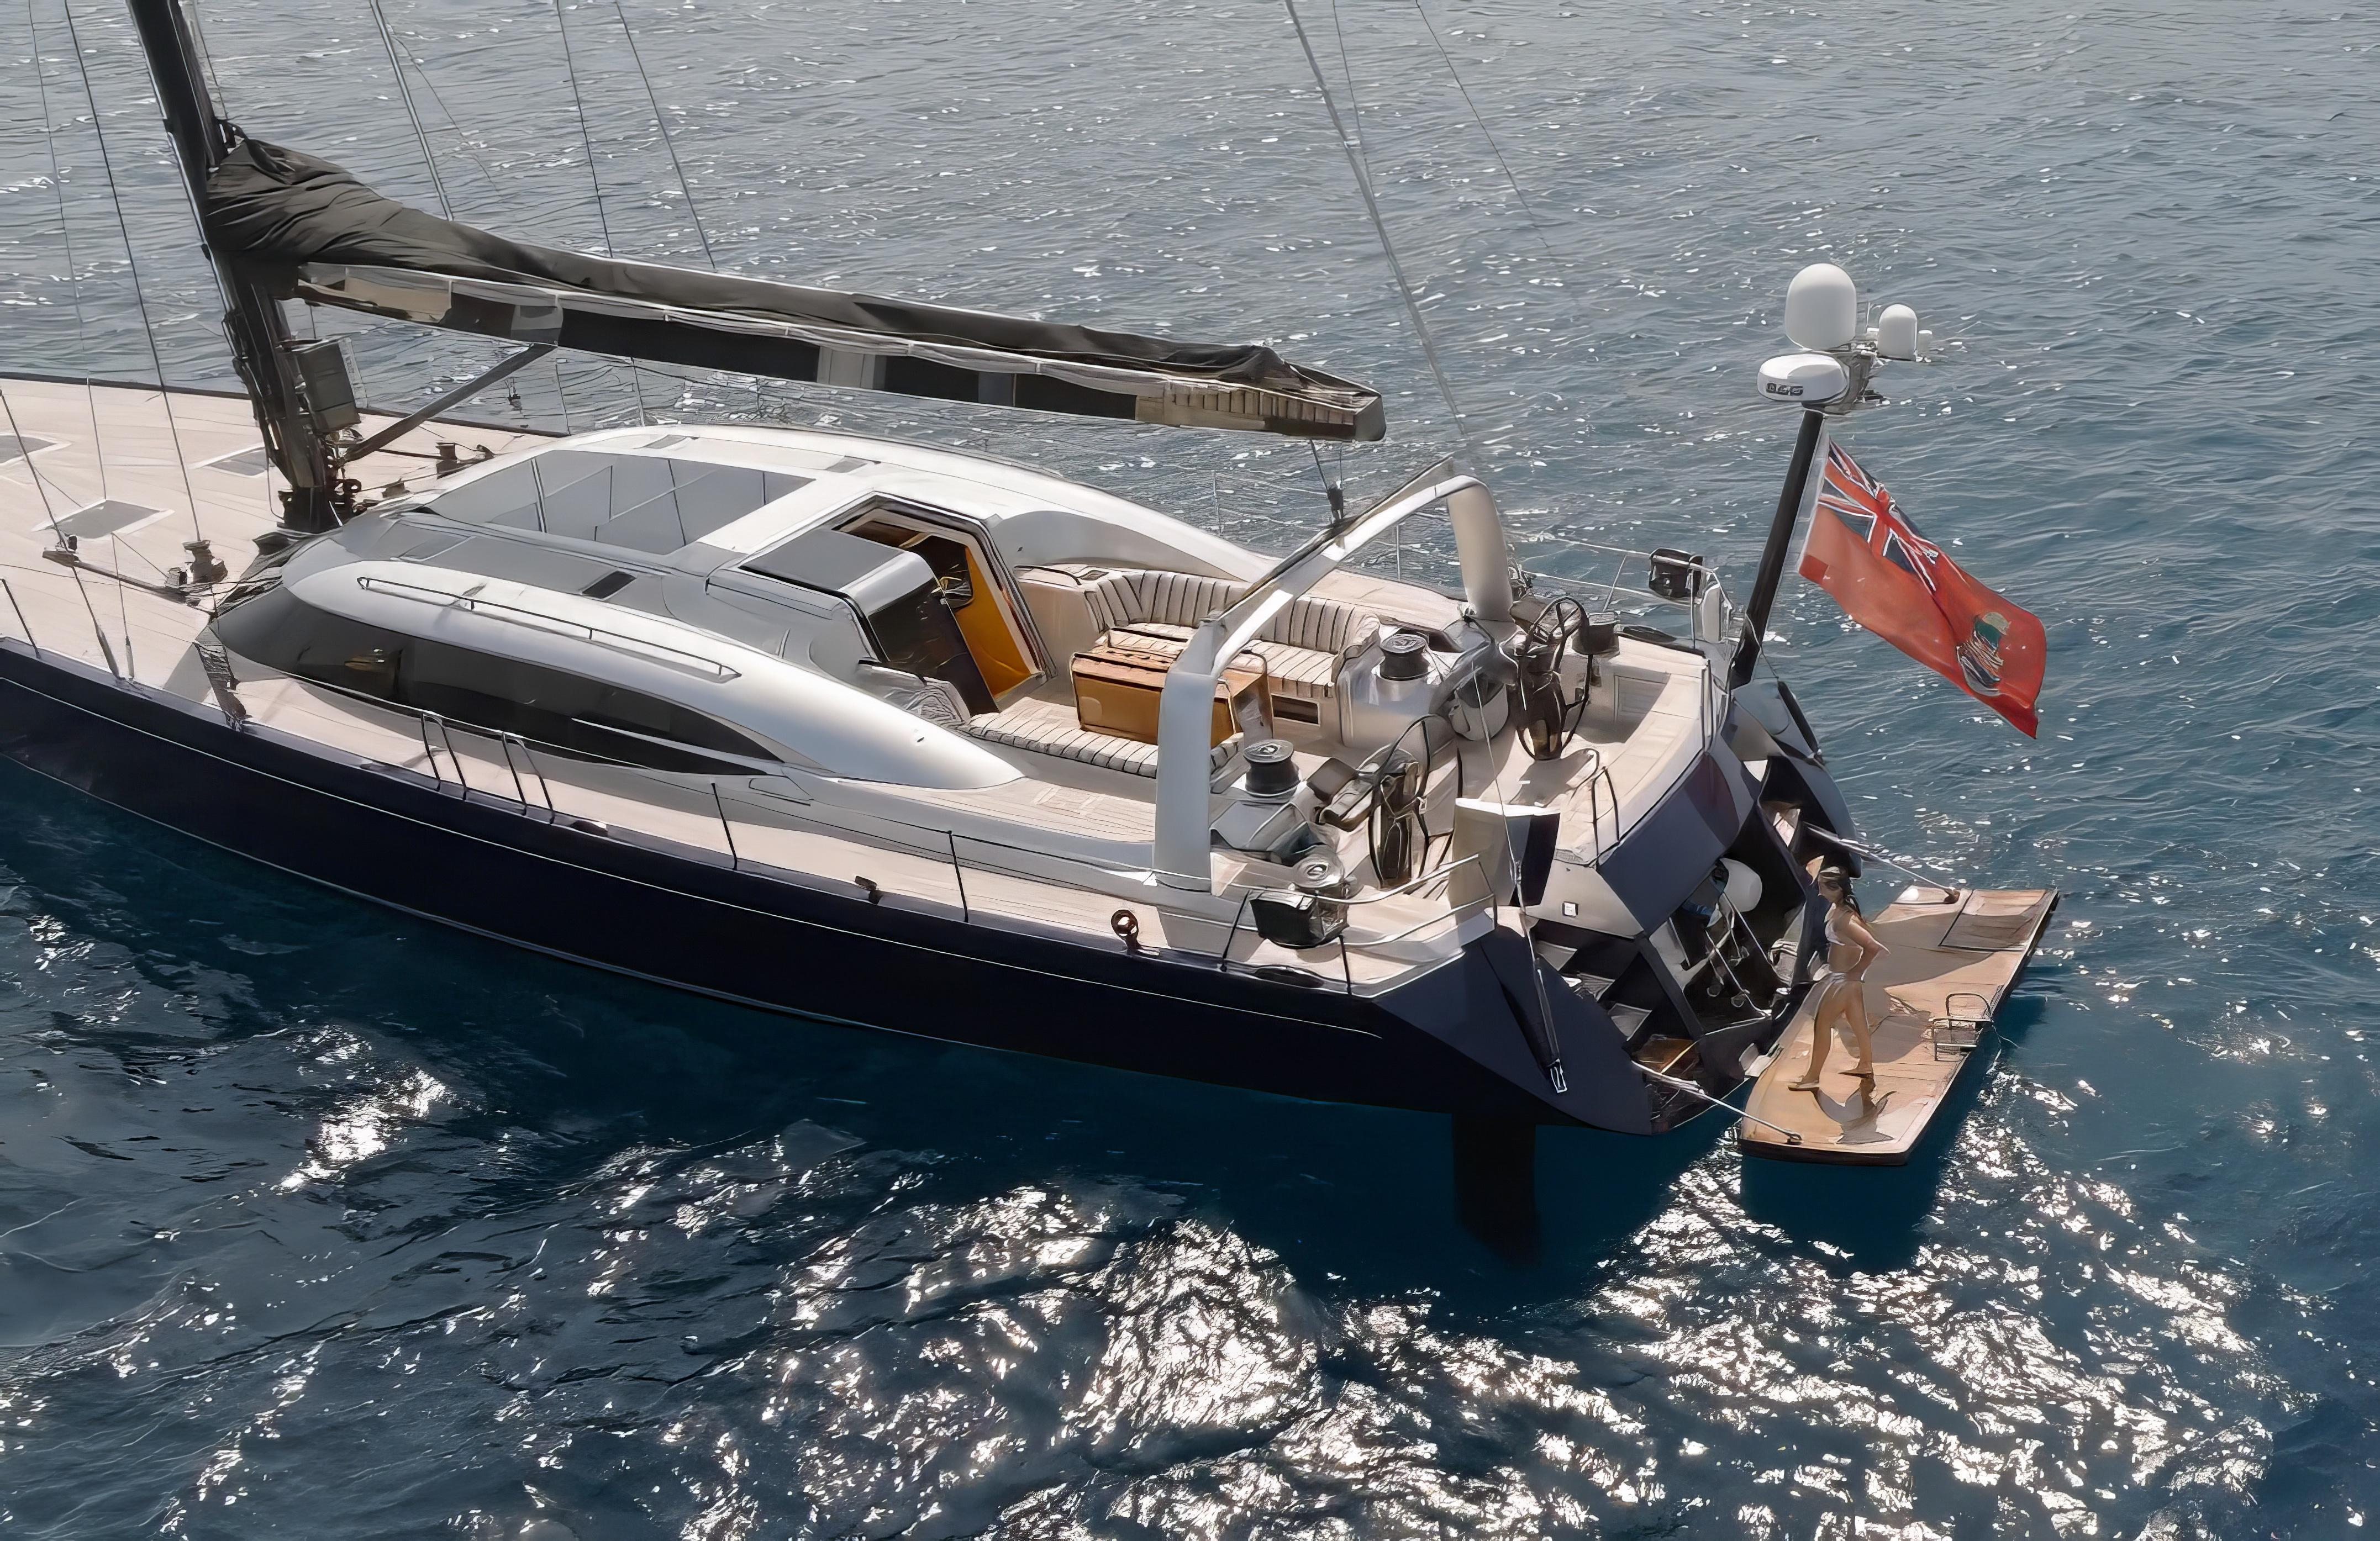 2010 Seaway Shipman 80 Racer/Cruiser for sale - YachtWorld